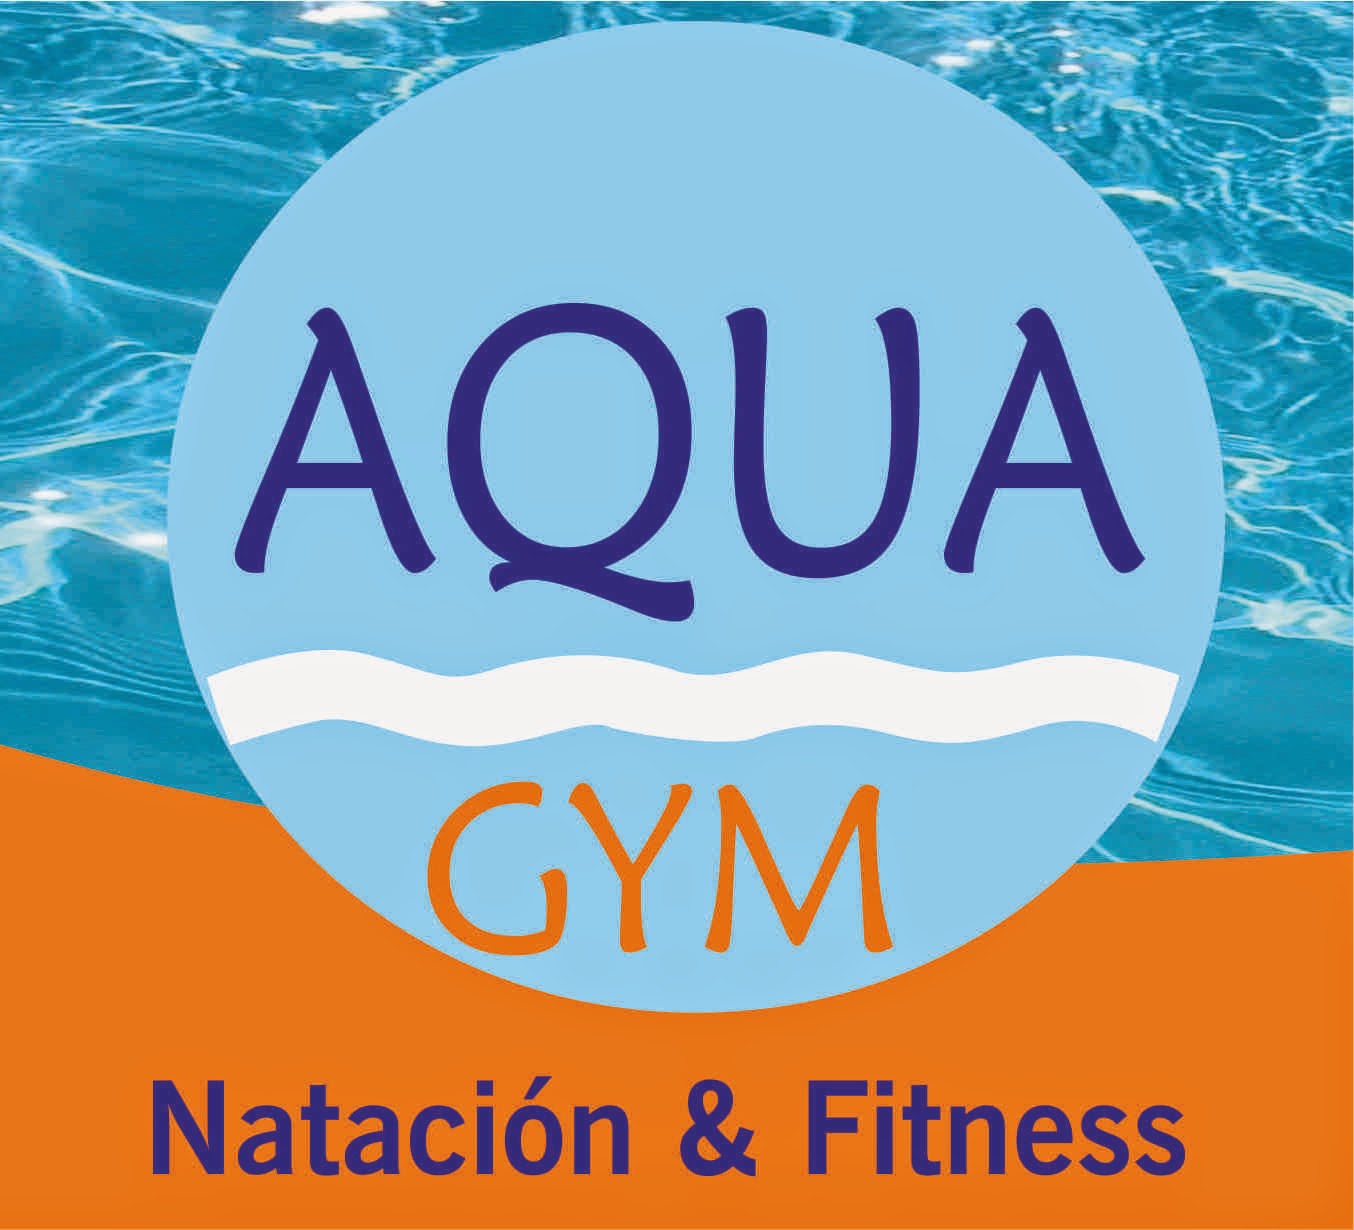 Aqua Gym Natación & Fitness